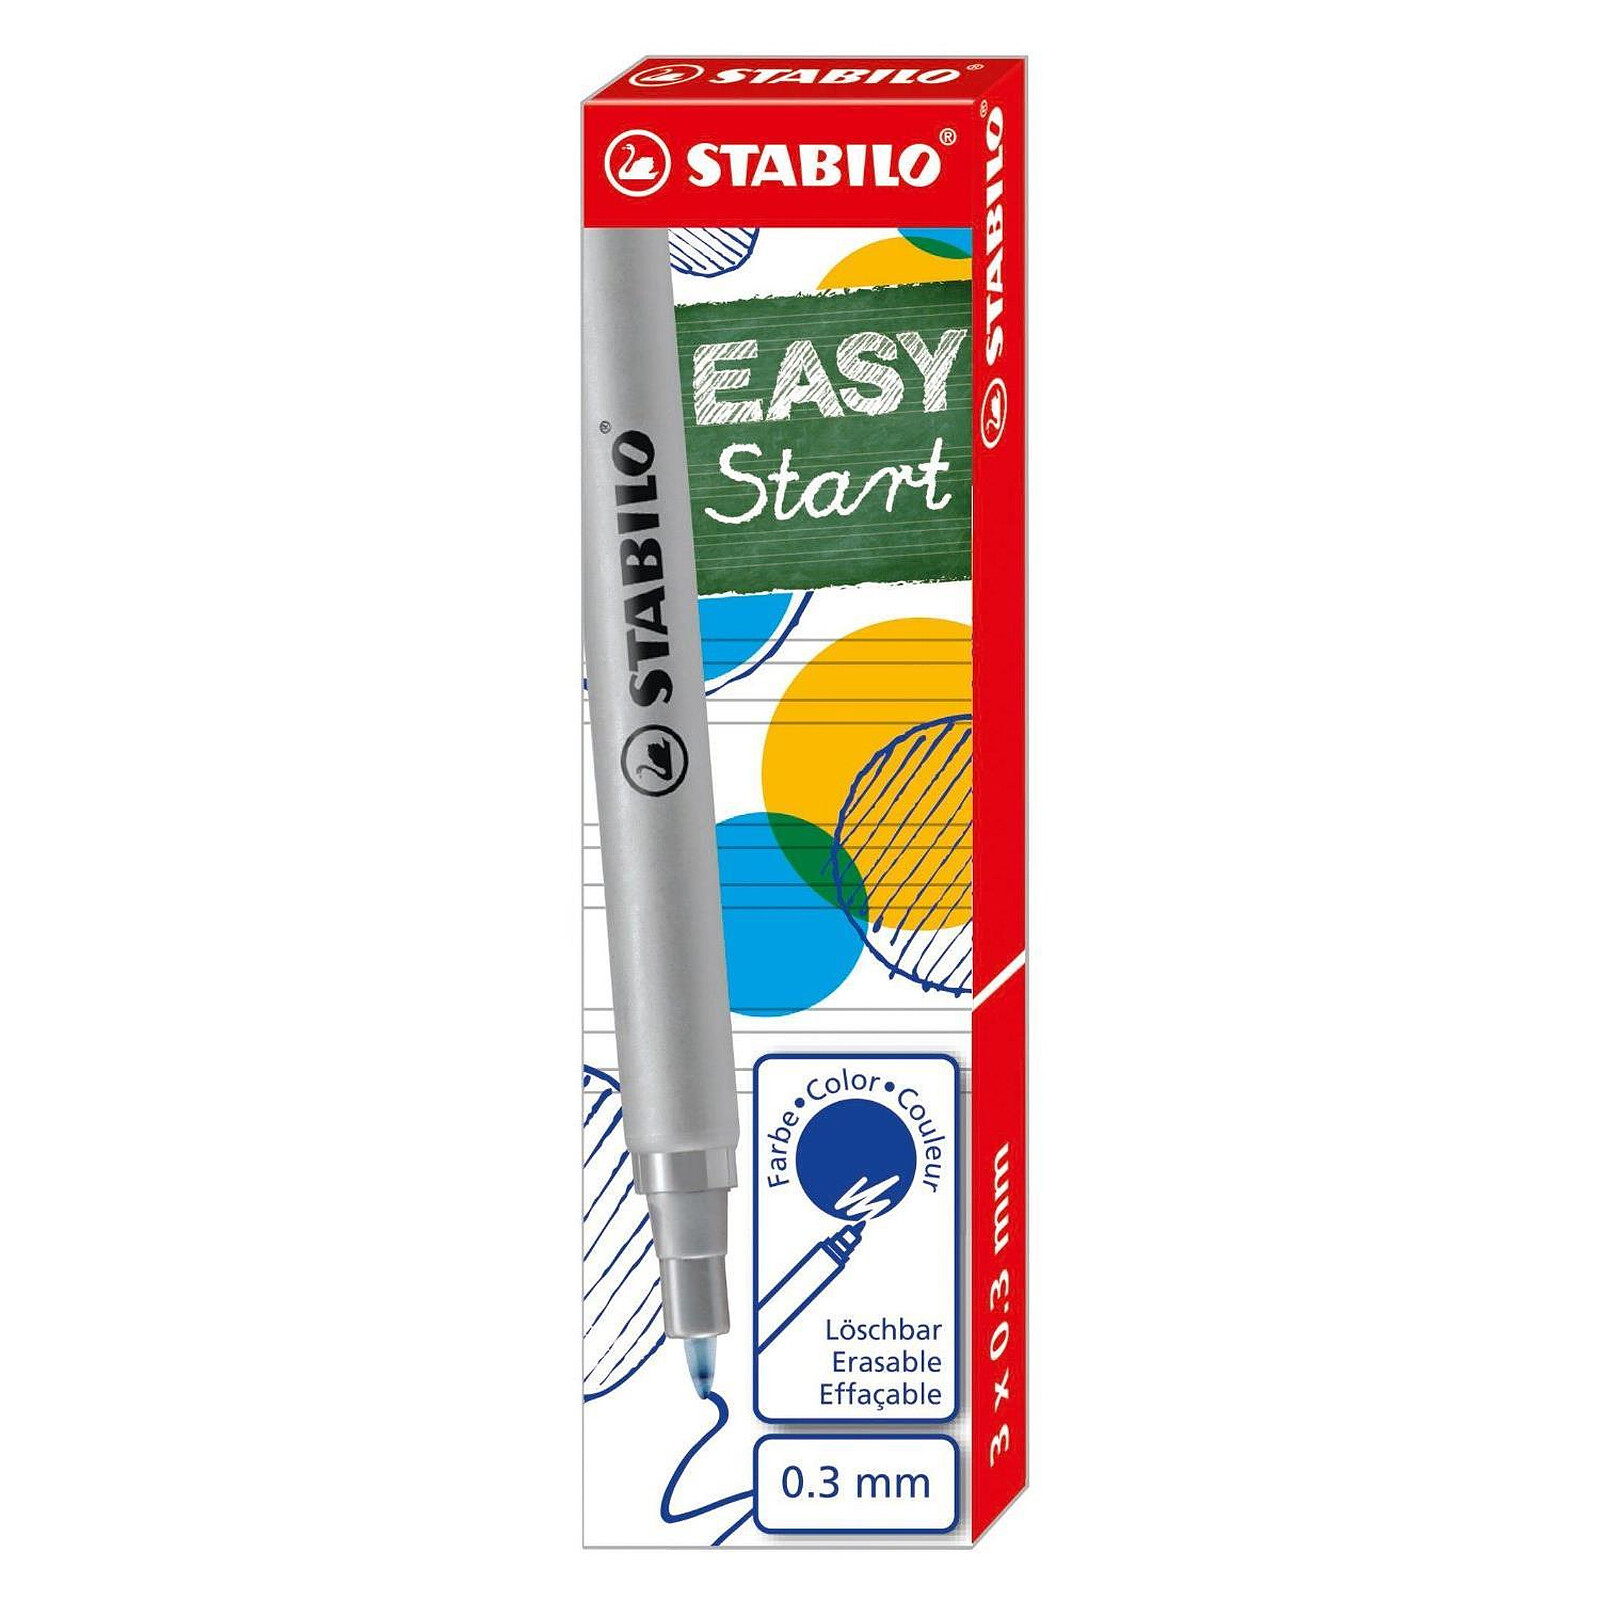 STABILO Stylo feutre pointe moyenne SENSOR bleu avec zone grip ergonomique